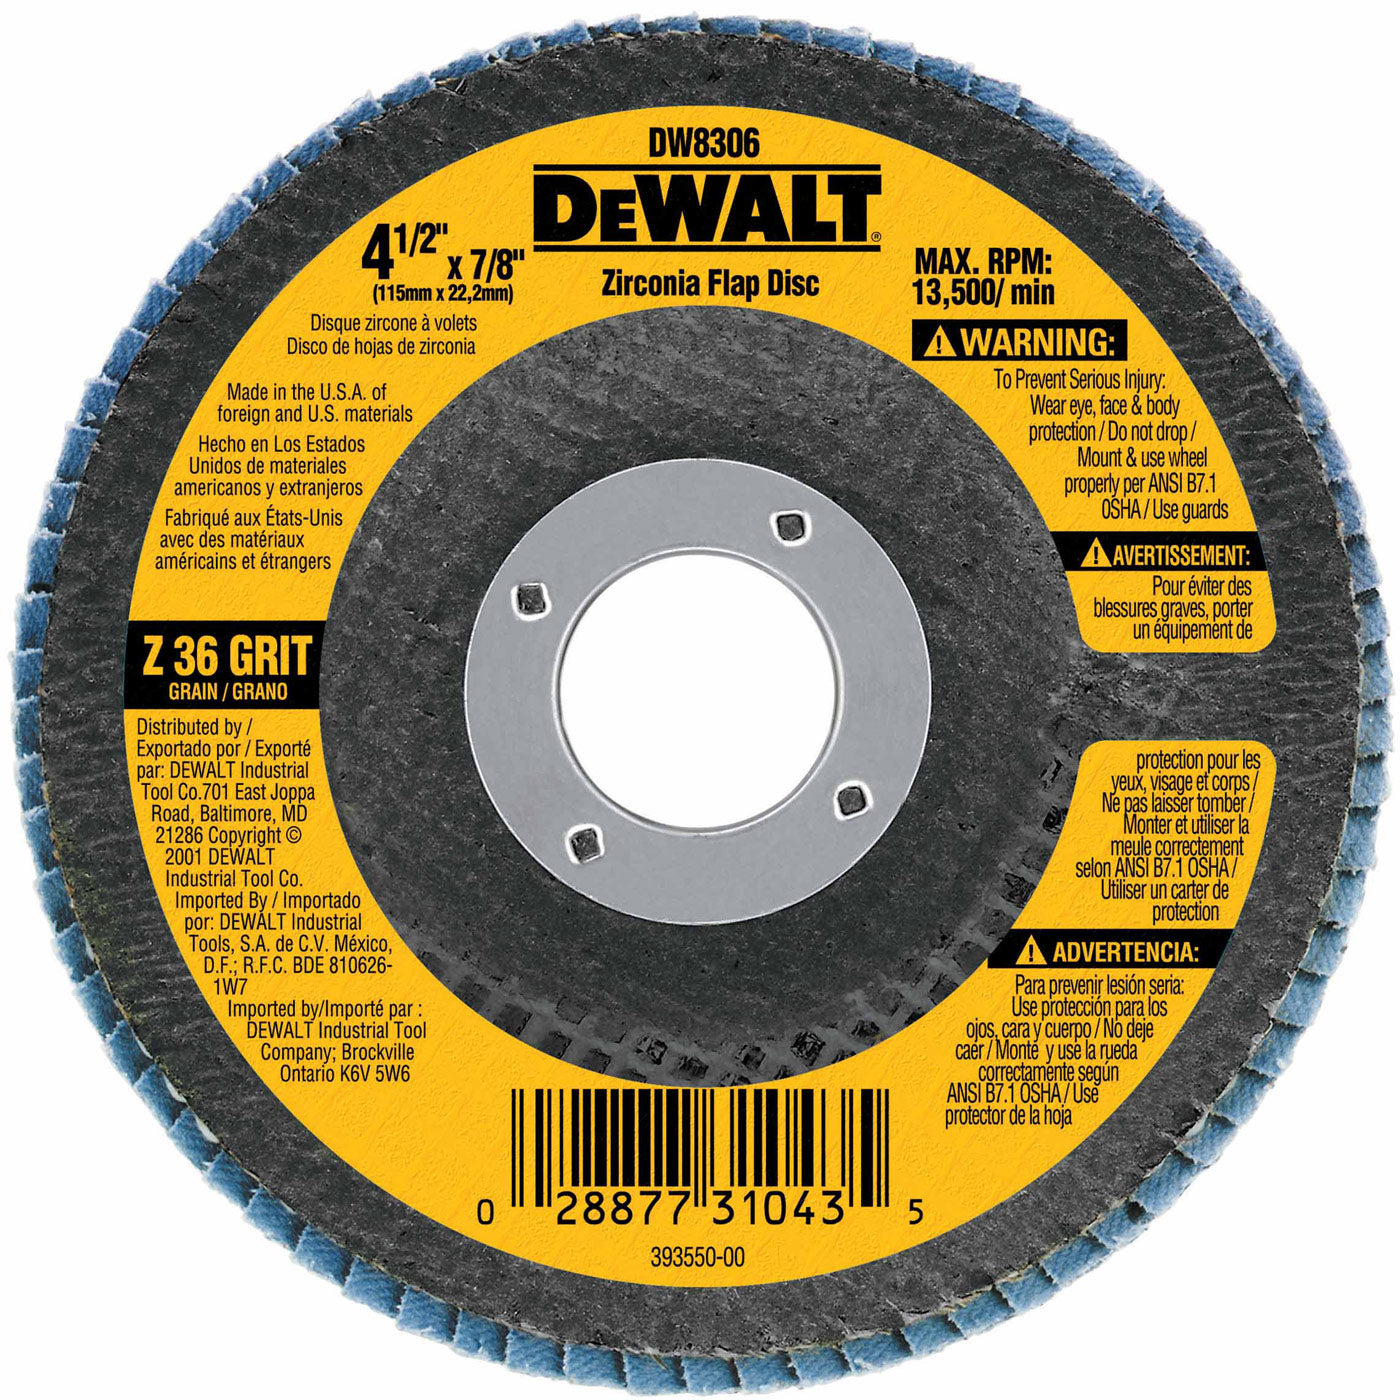 DeWalt DW8306 4-1/2" x 7/8" 36 Grit Zirconia Flap Disc